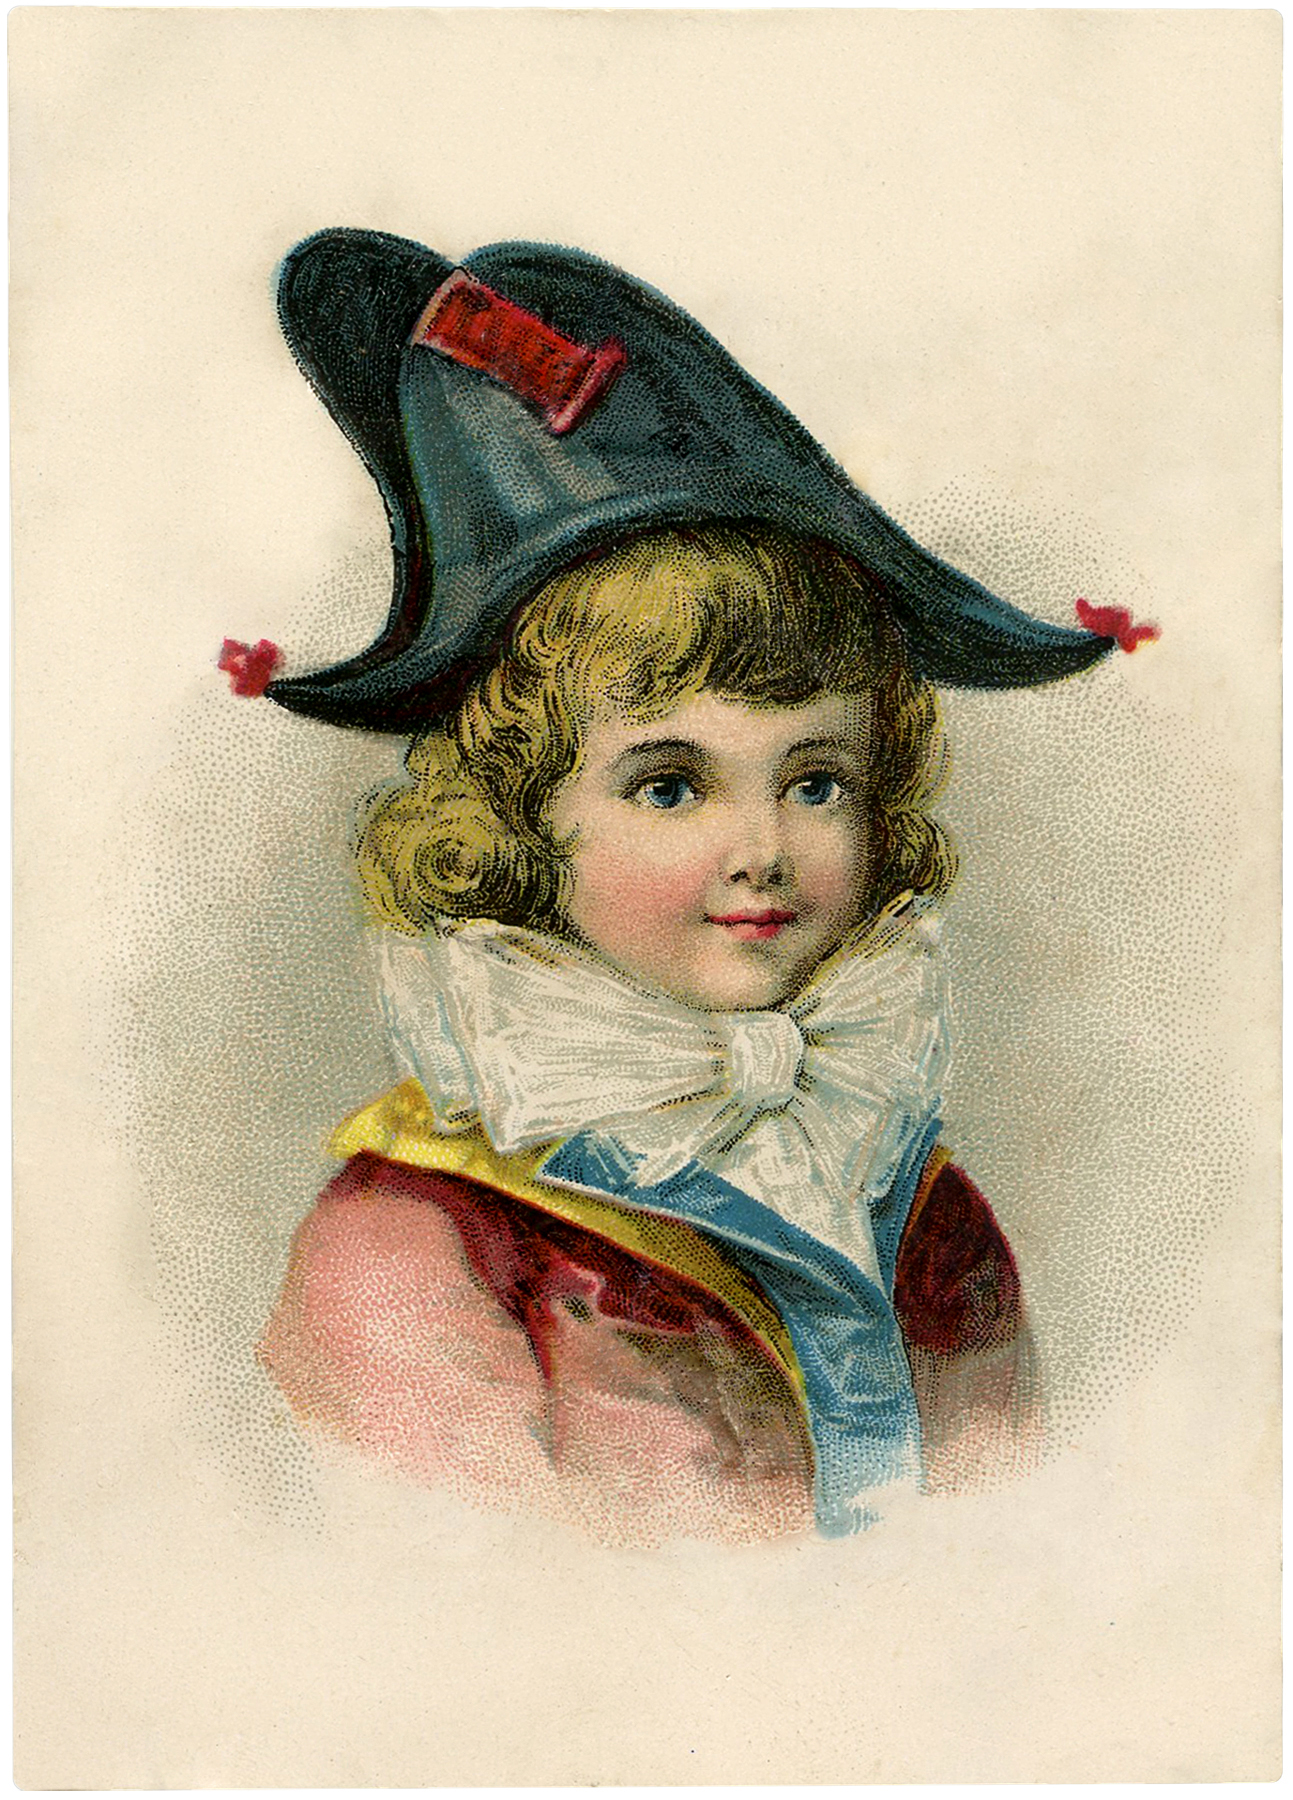 Darling Bicorne Hat Boy Image! - The Graphics Fairy1293 x 1800